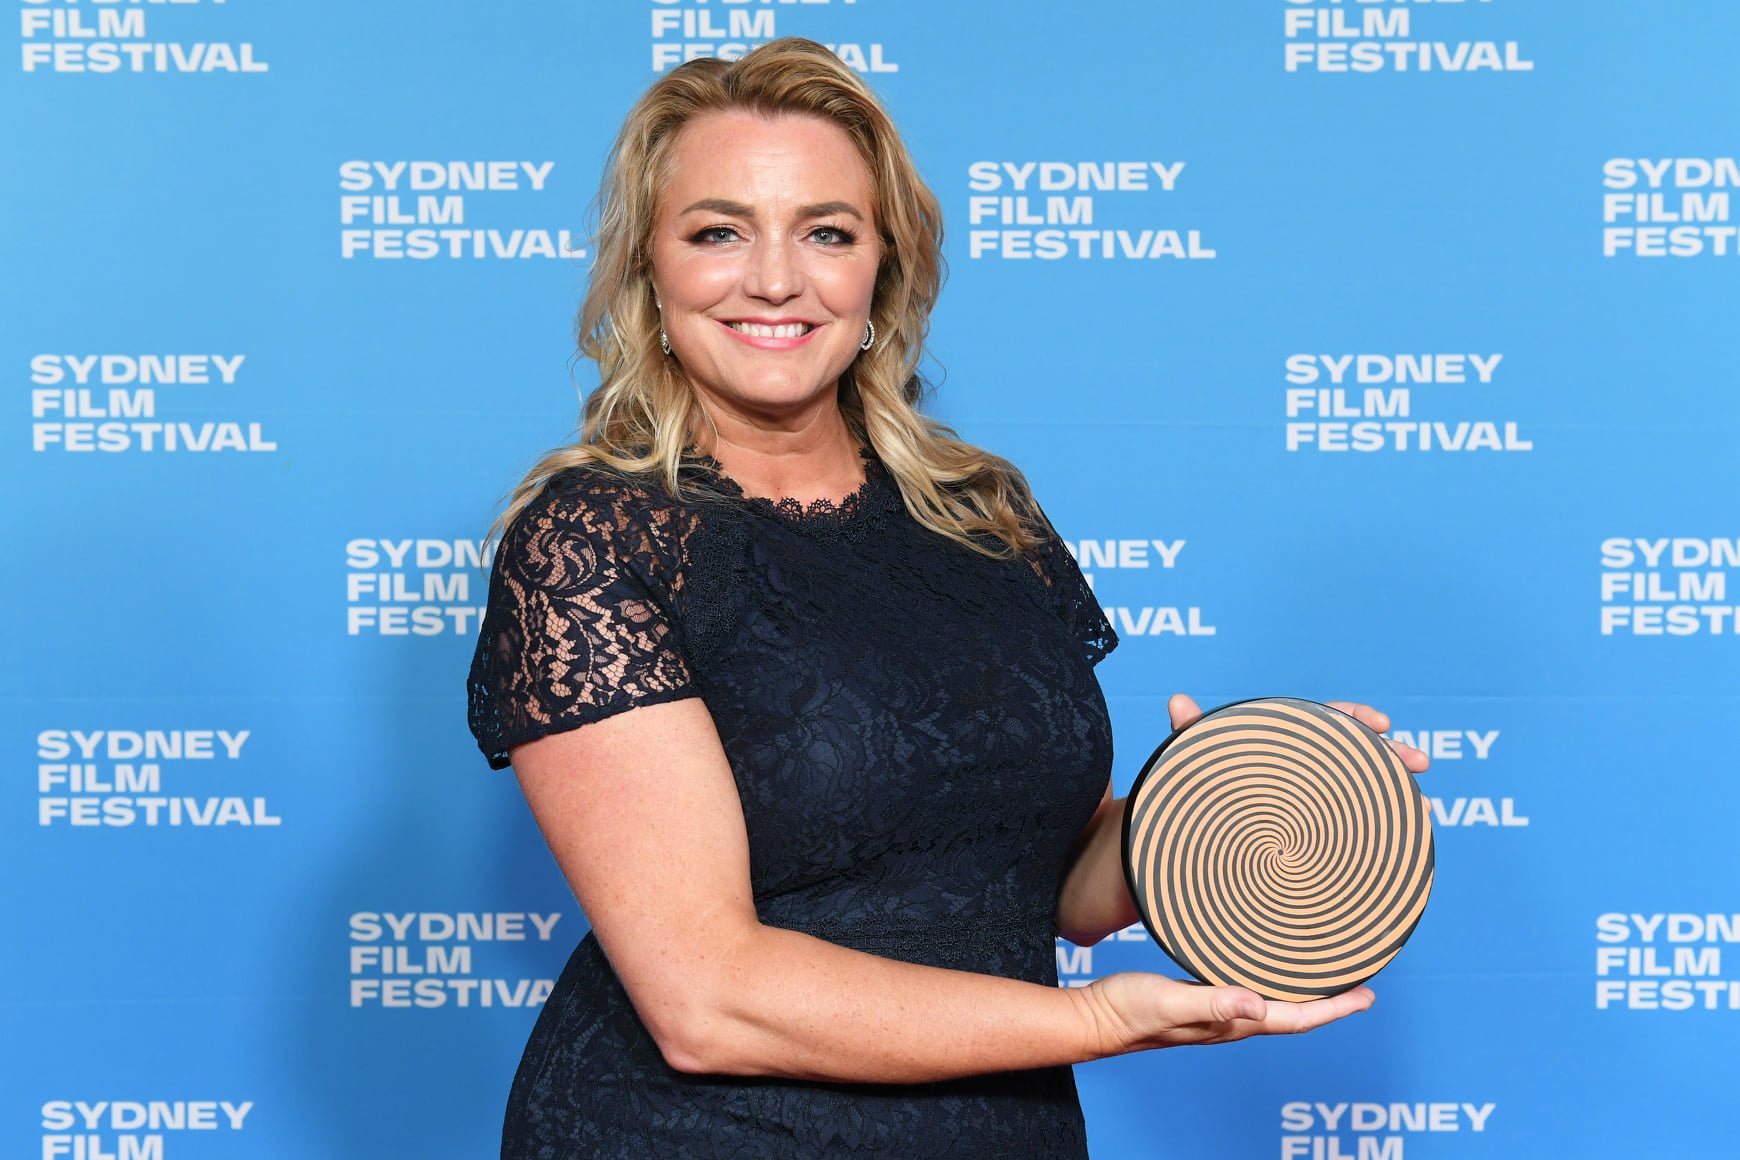 Winners and Award Sydney Festival (List Film Nominees) of